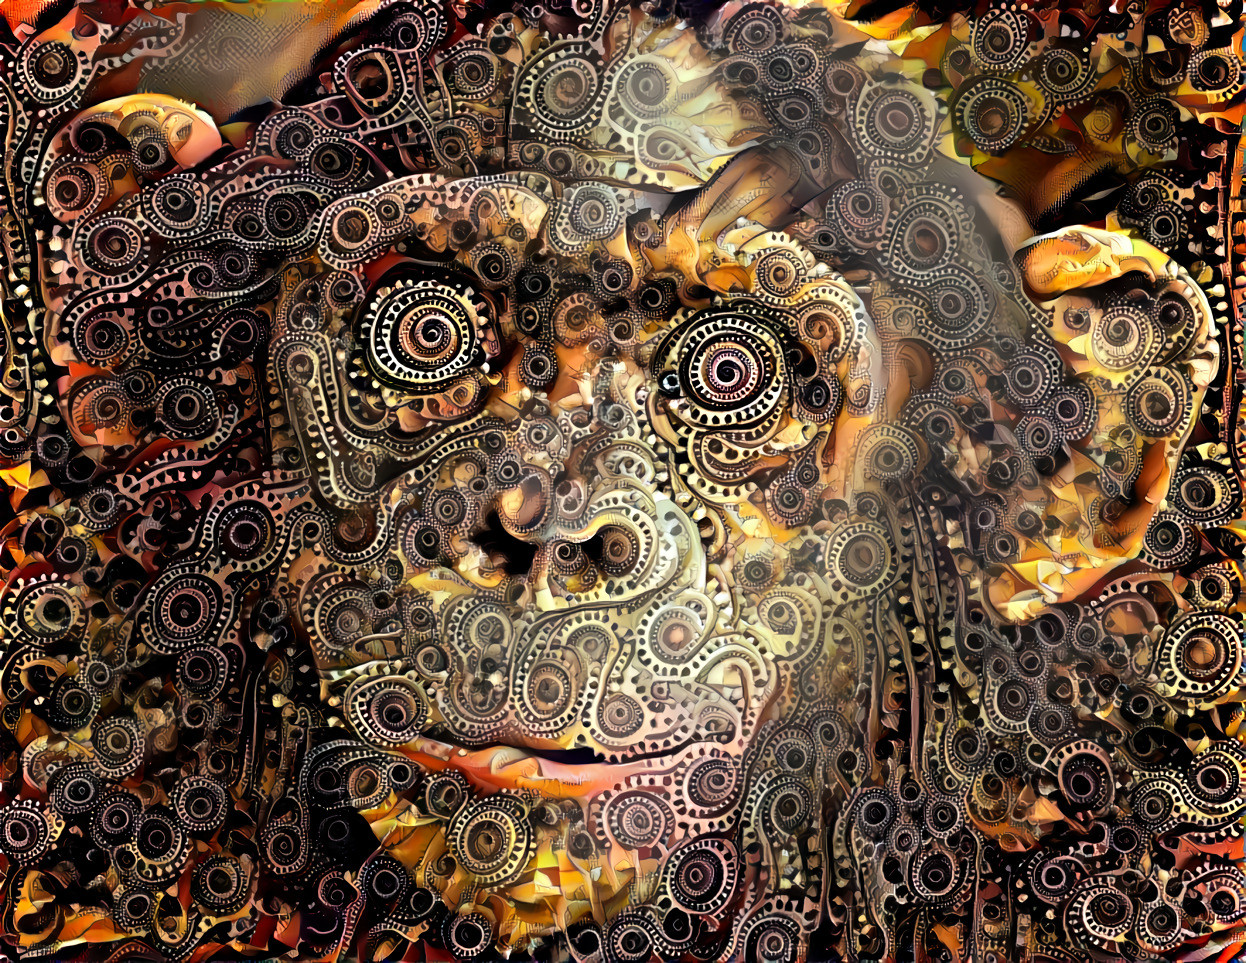 chimp face